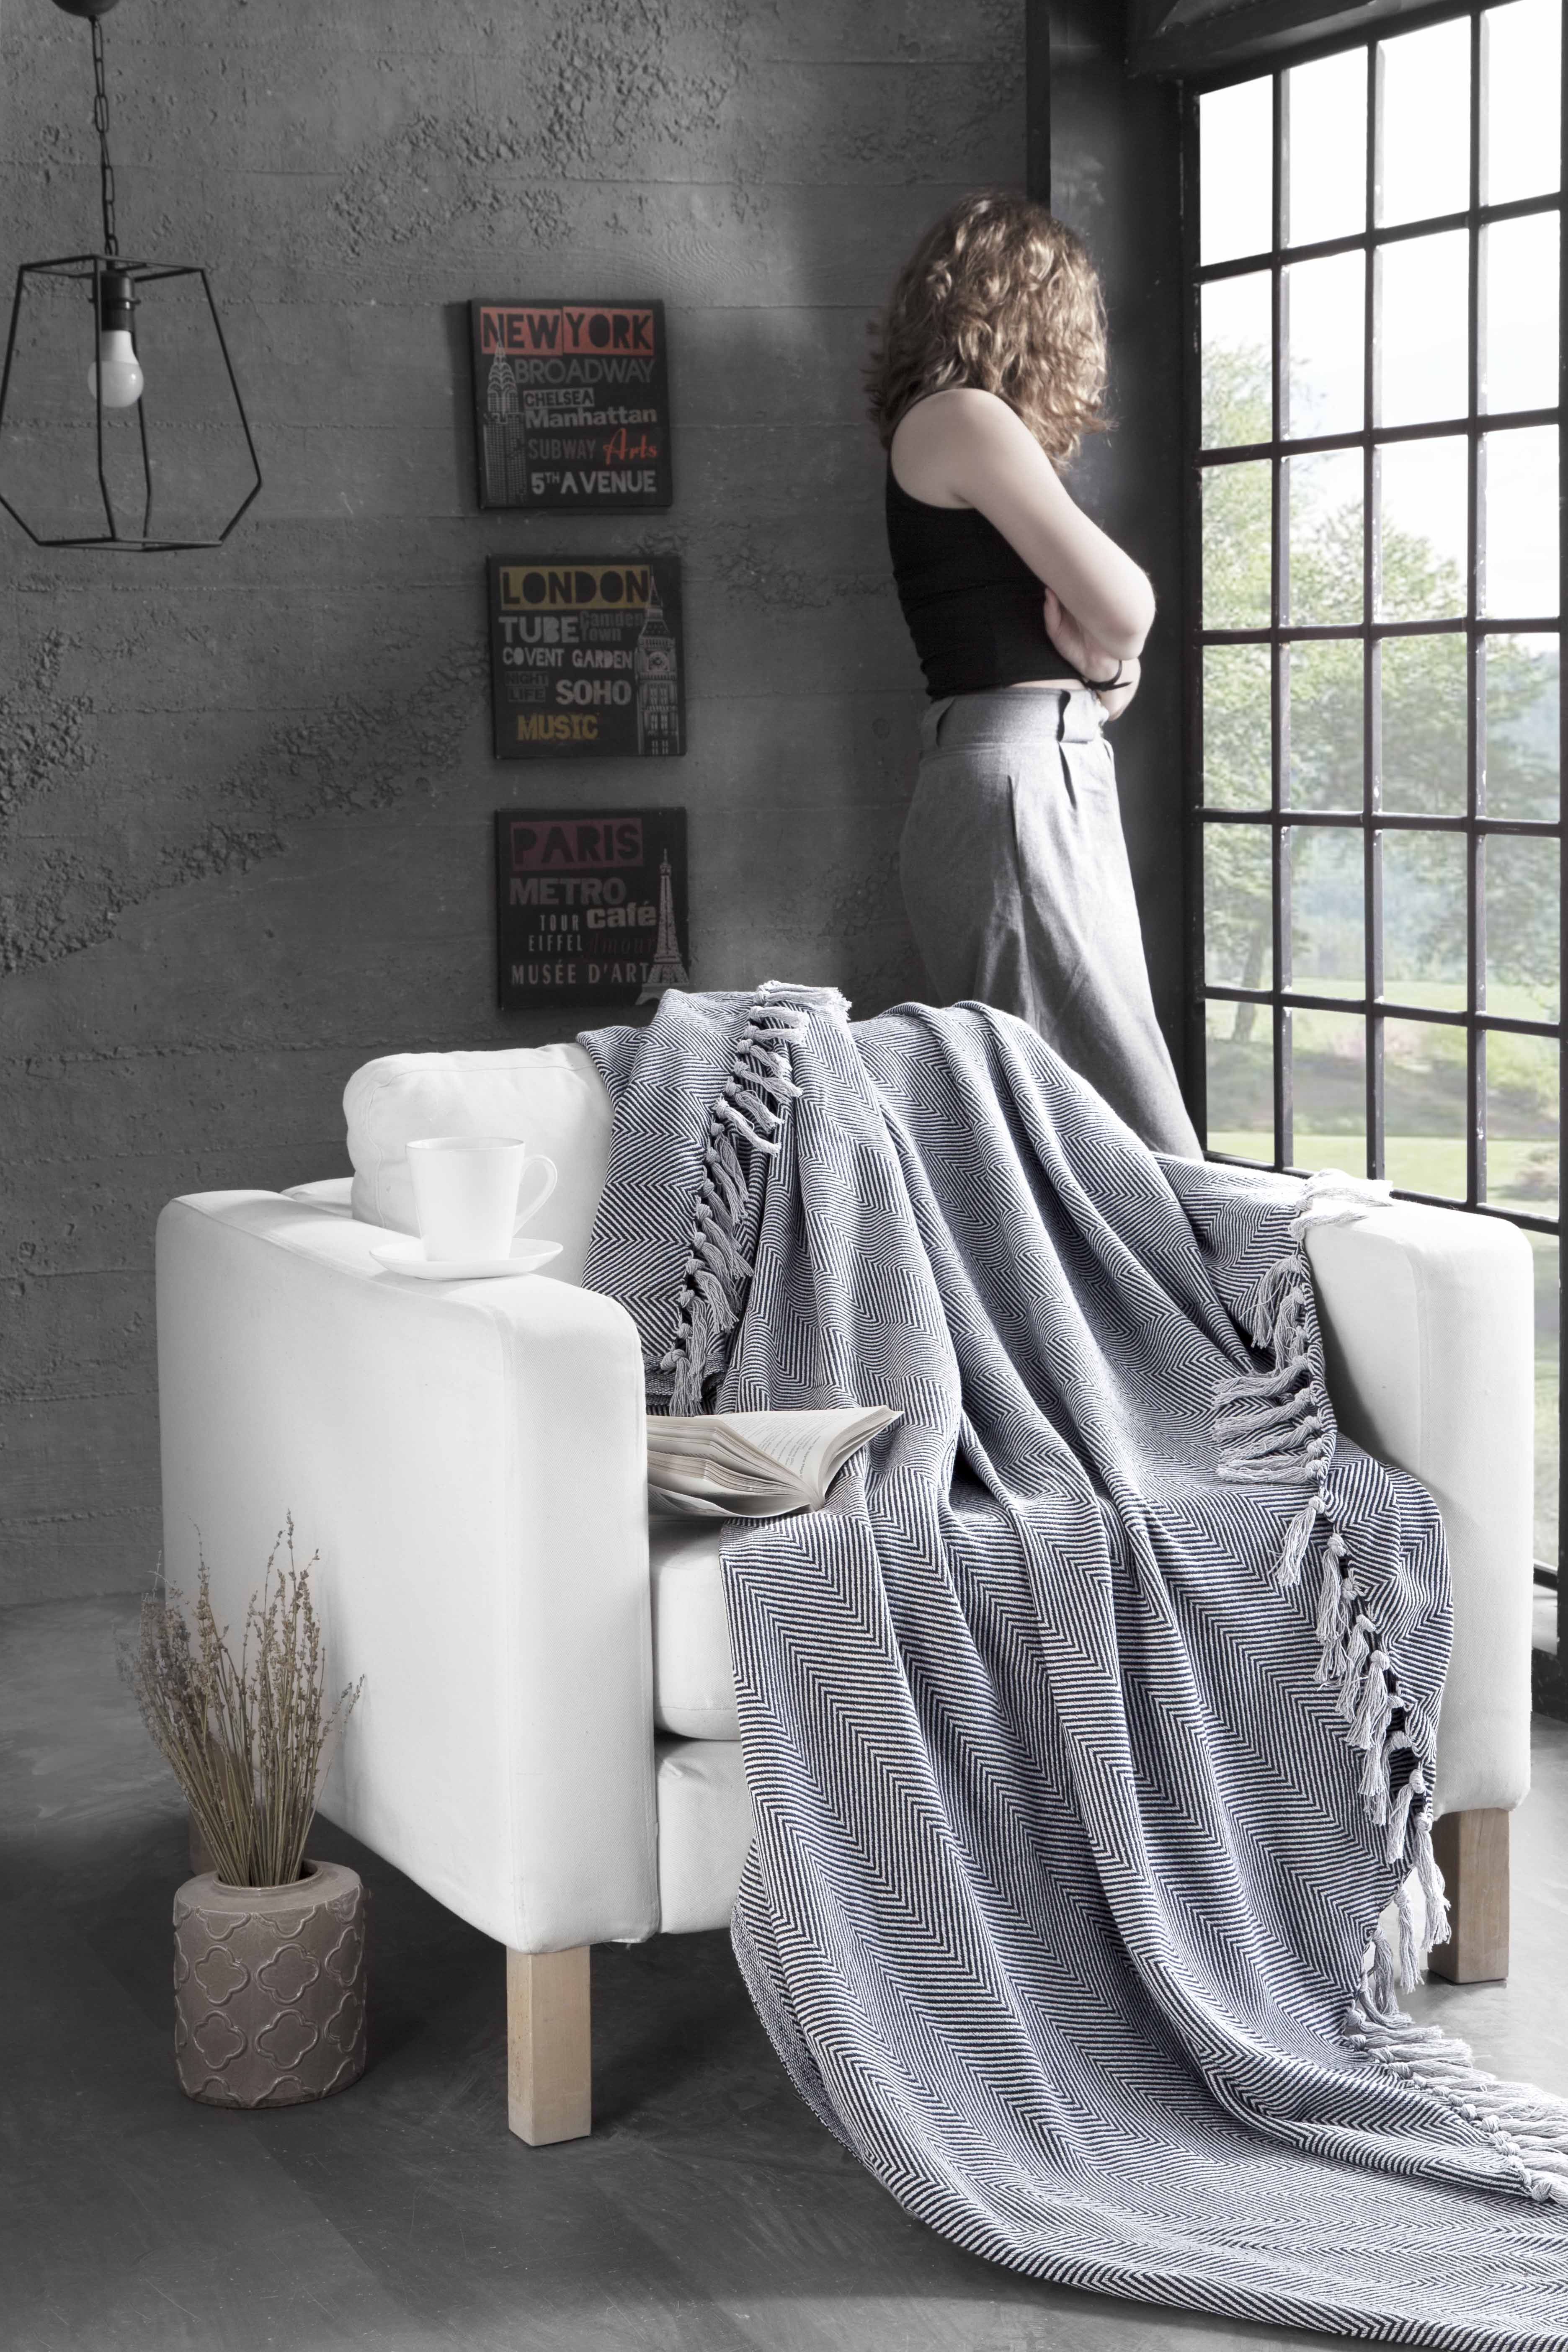 louis Vuitton blanket – MY luxurious home